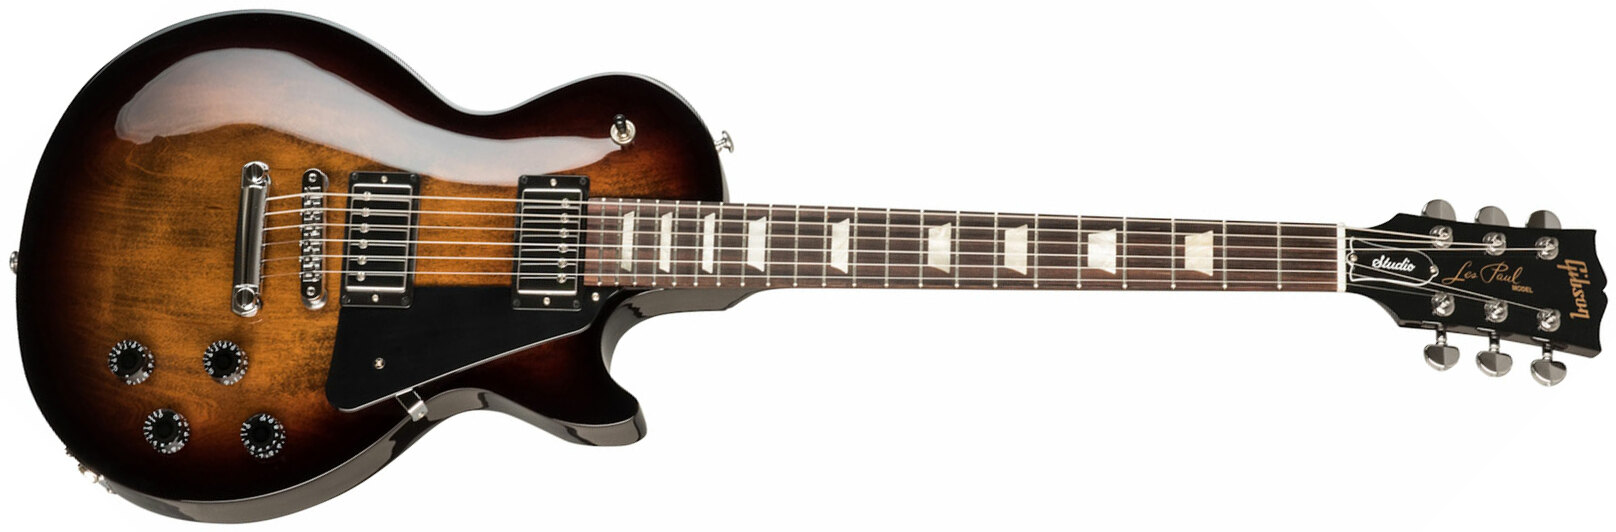 Gibson Les Paul Studio Modern 2h Ht Rw - Smokehouse Burst - Enkel gesneden elektrische gitaar - Main picture